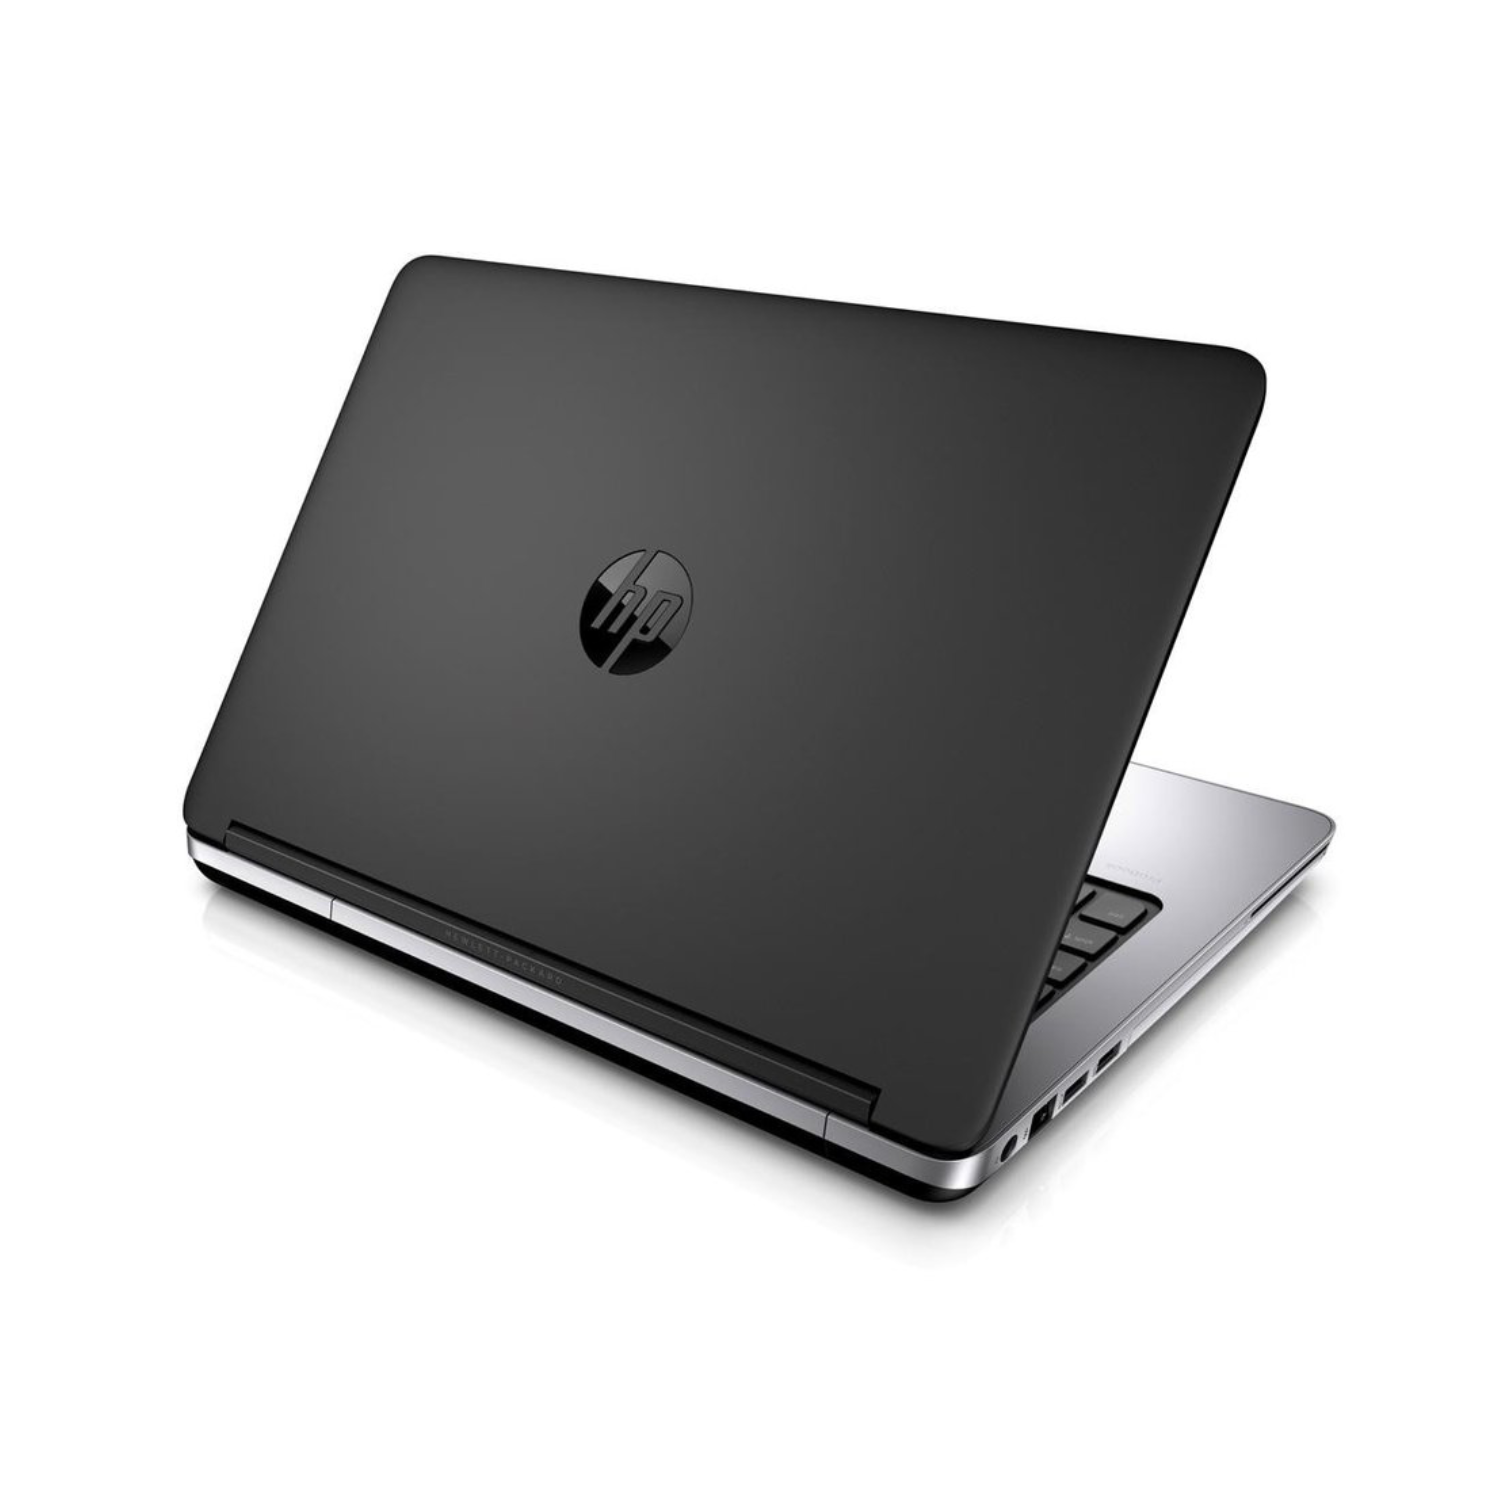 HP ProBook 640 G1 i5 (4th Gen) 4GB RAM 128GB SSD 14”